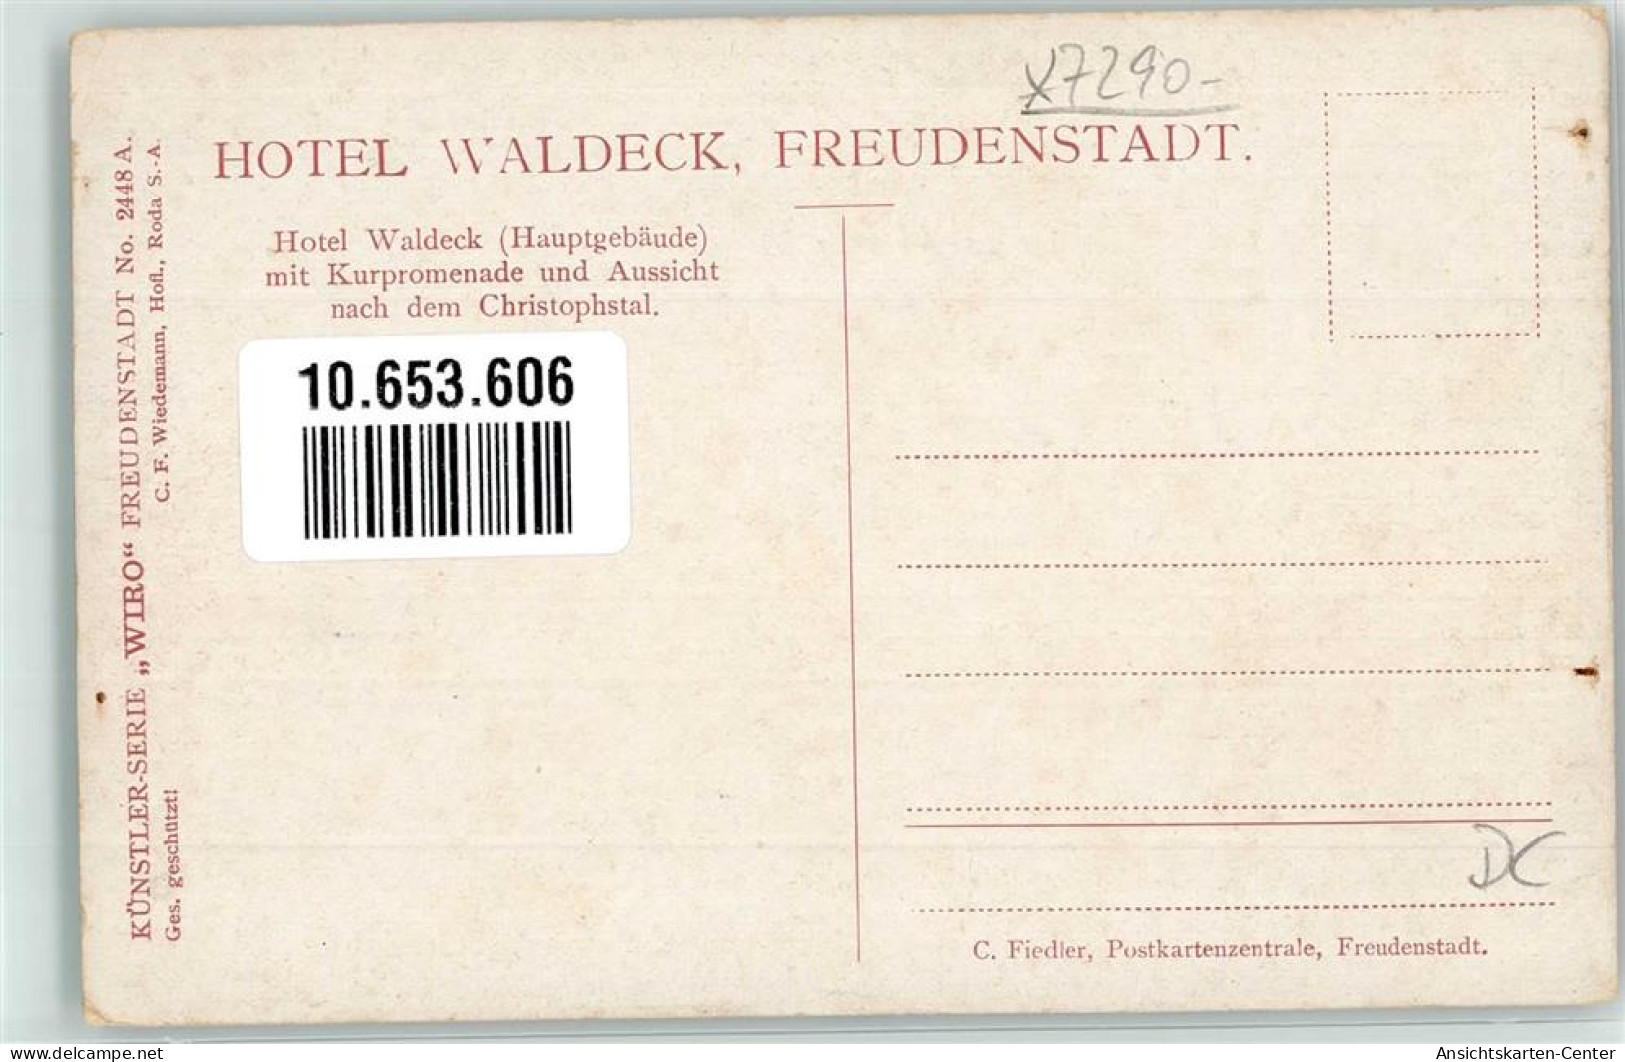 10653606 - Freudenstadt - Freudenstadt